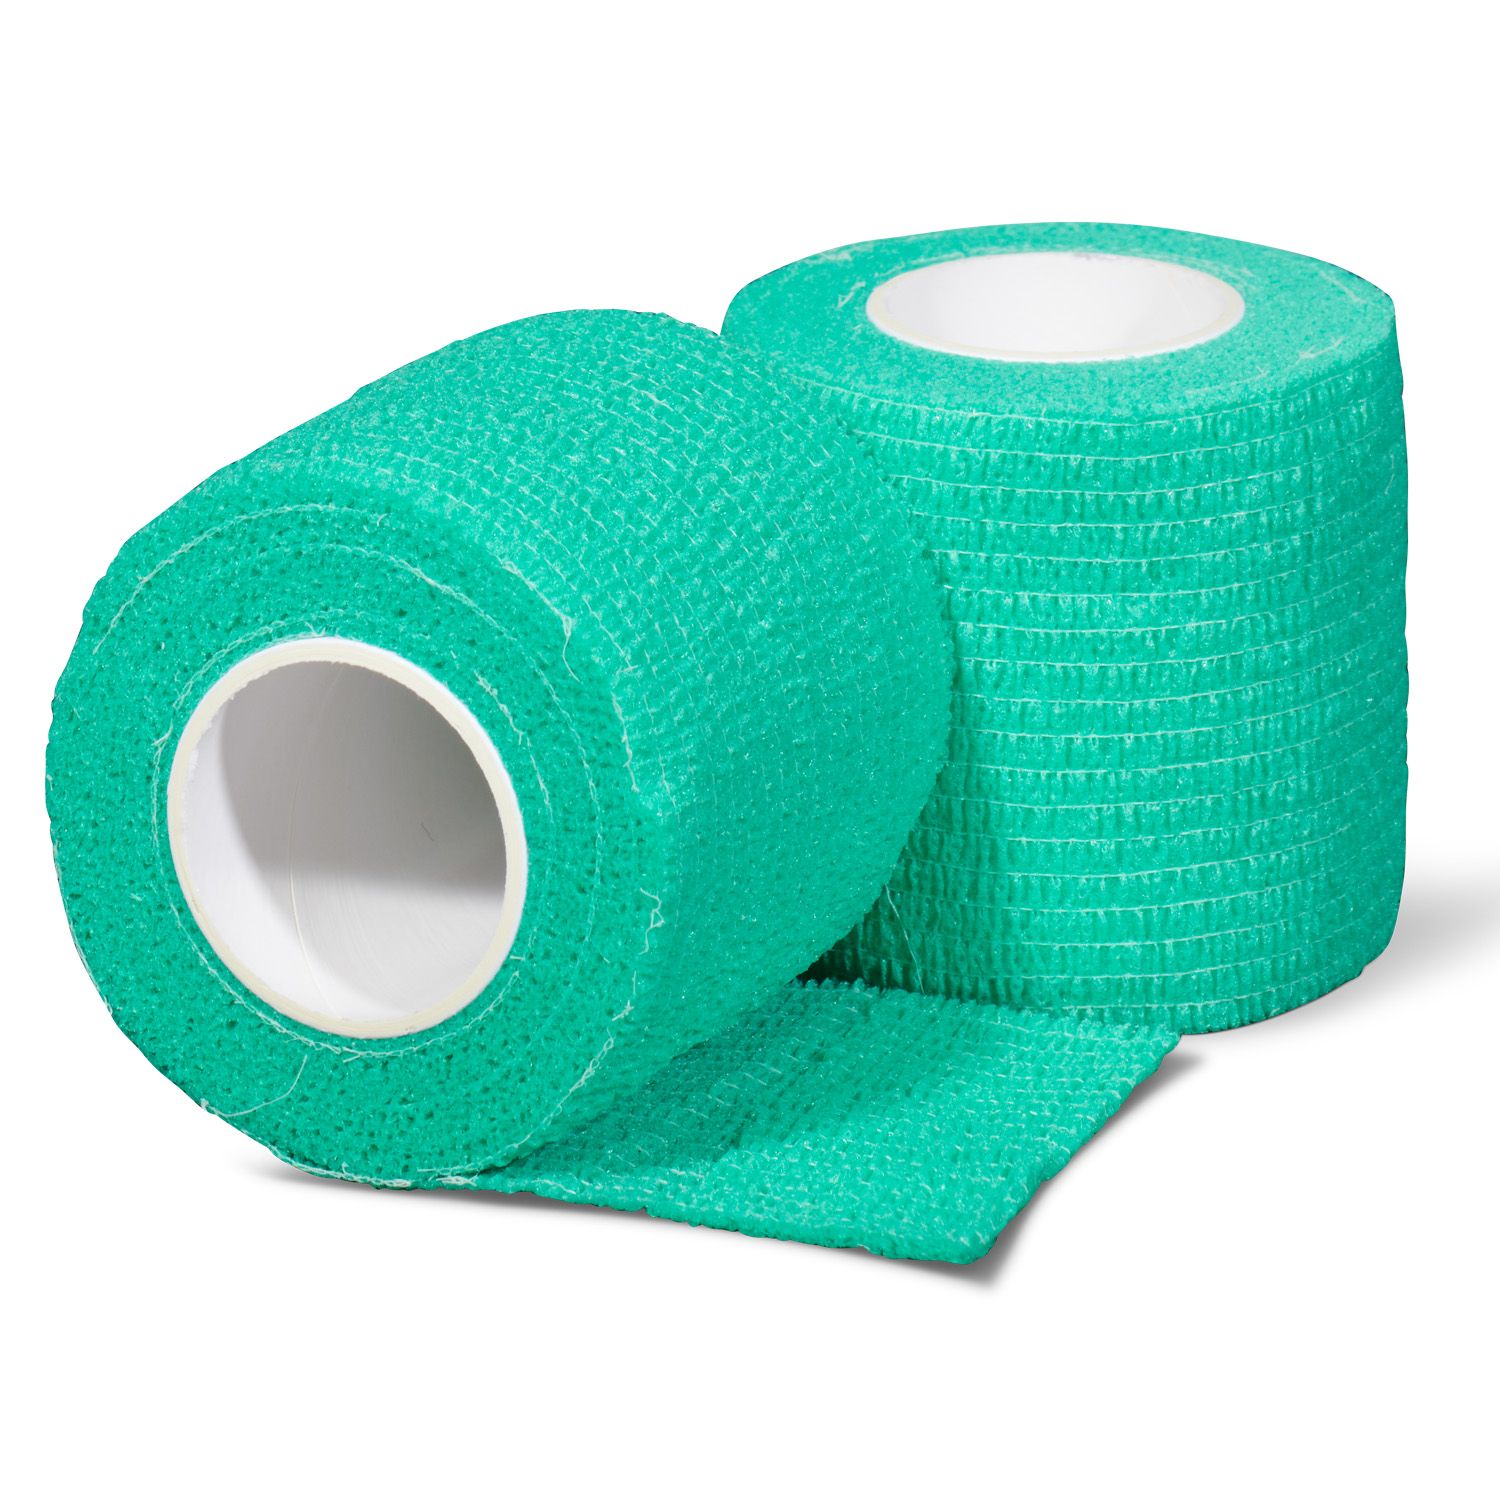 gladiator sports underwrap bandage per 8 rolls green